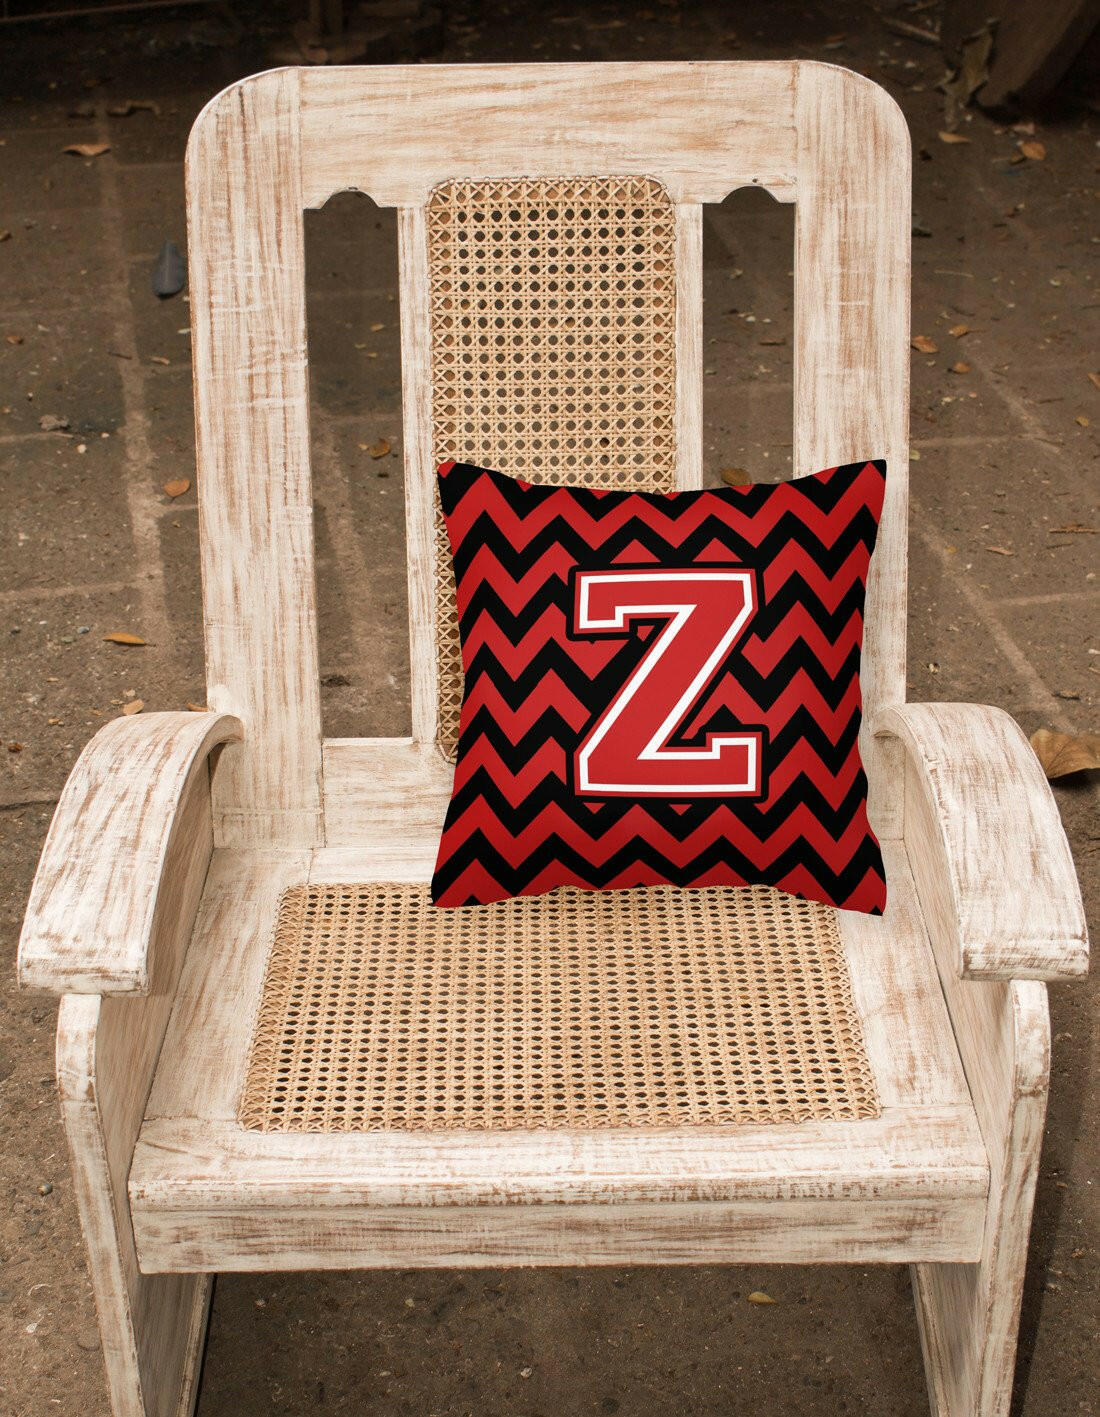 Letter Z Chevron Black and Red   Fabric Decorative Pillow CJ1047-ZPW1414 by Caroline's Treasures